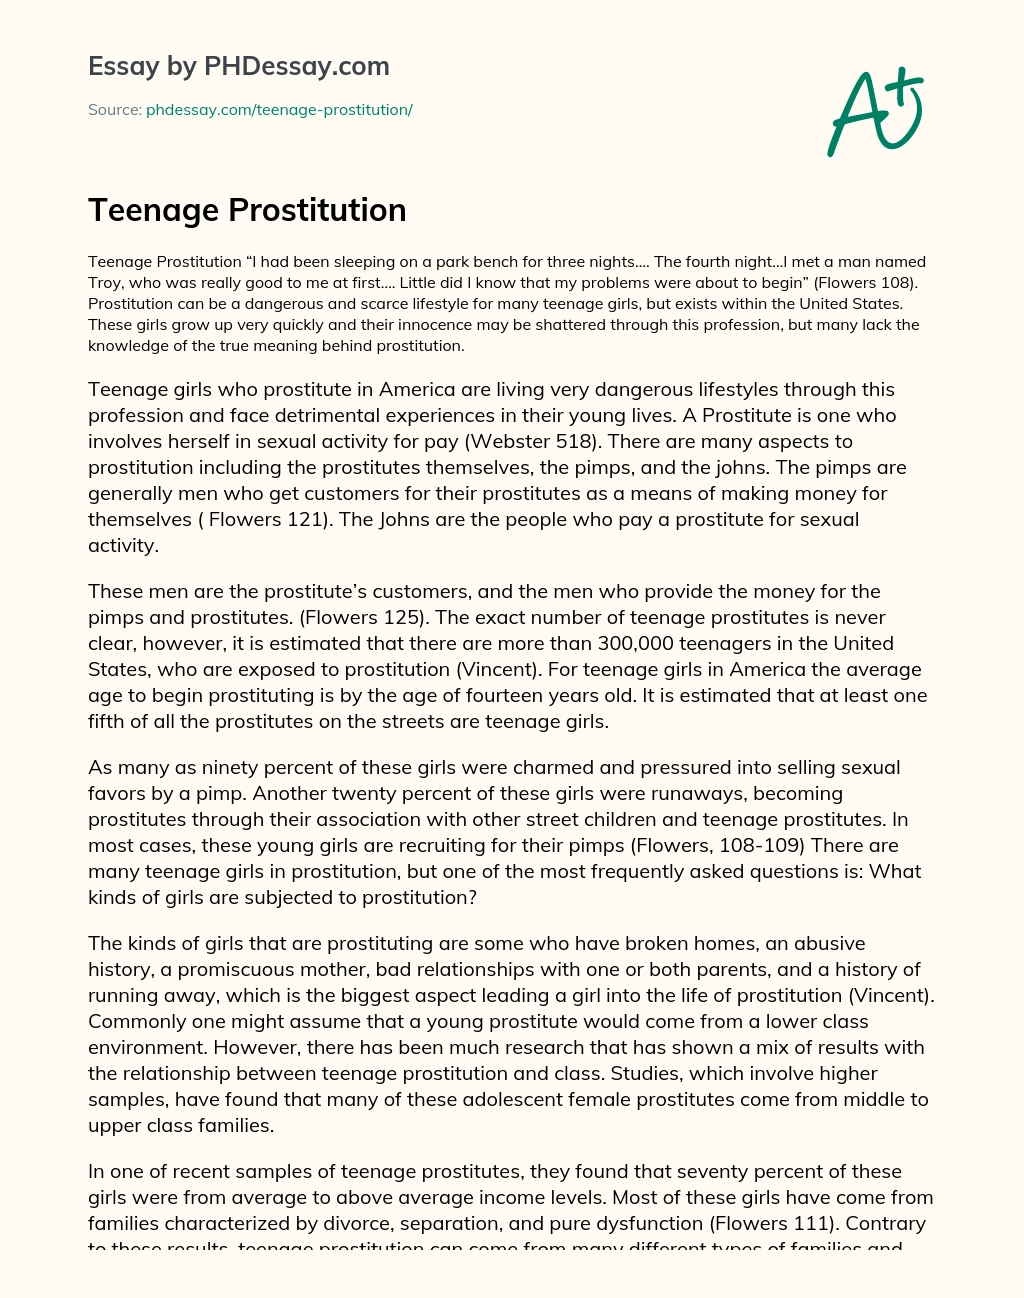 Teenage Prostitution essay